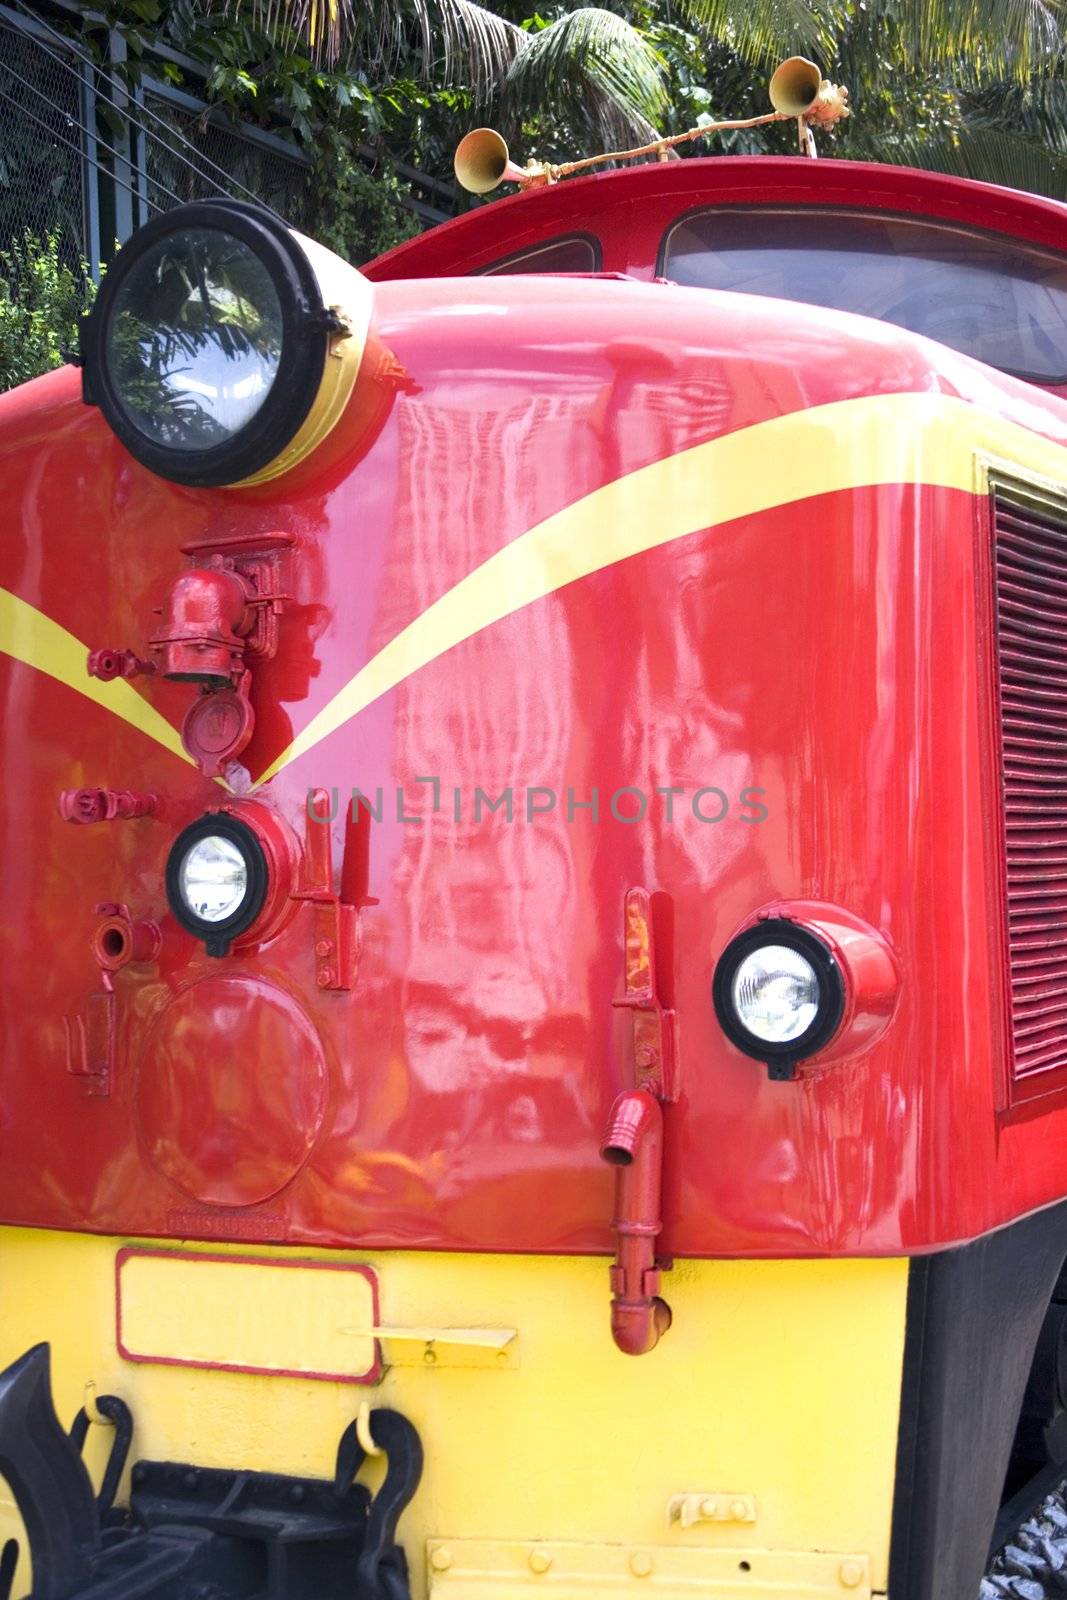 Image of a bright red vintage diesel train.